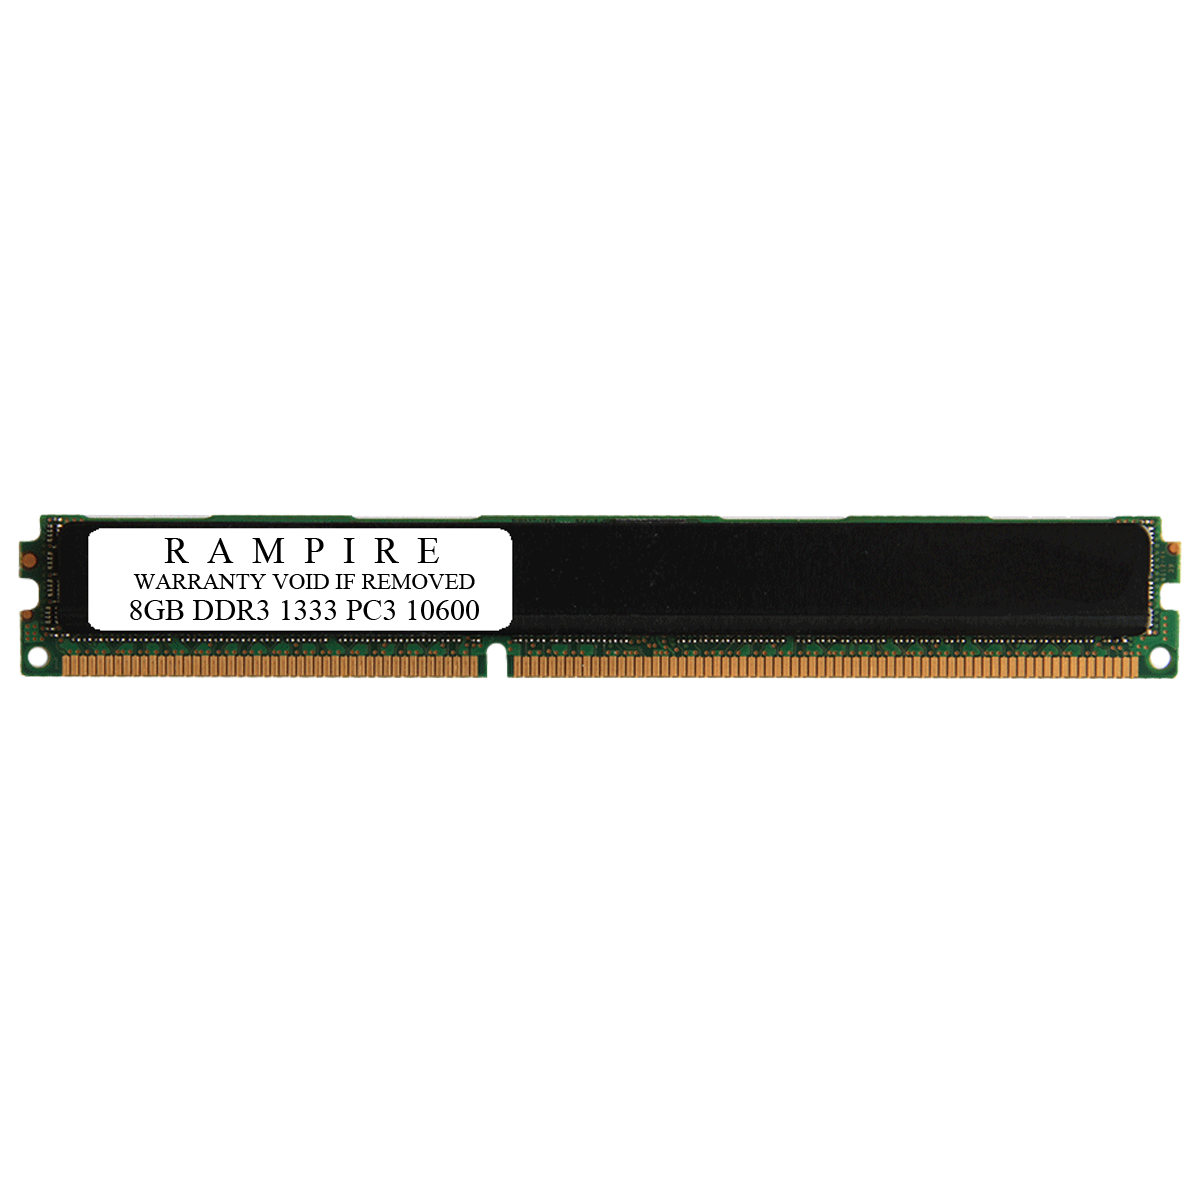 RAMPIRE 8GB DDR3 1333 (PC3 10600) 240-Pin SDRAM 2Rx4 VLP (Low Profile) 1.35V ECC Registered Server Memory